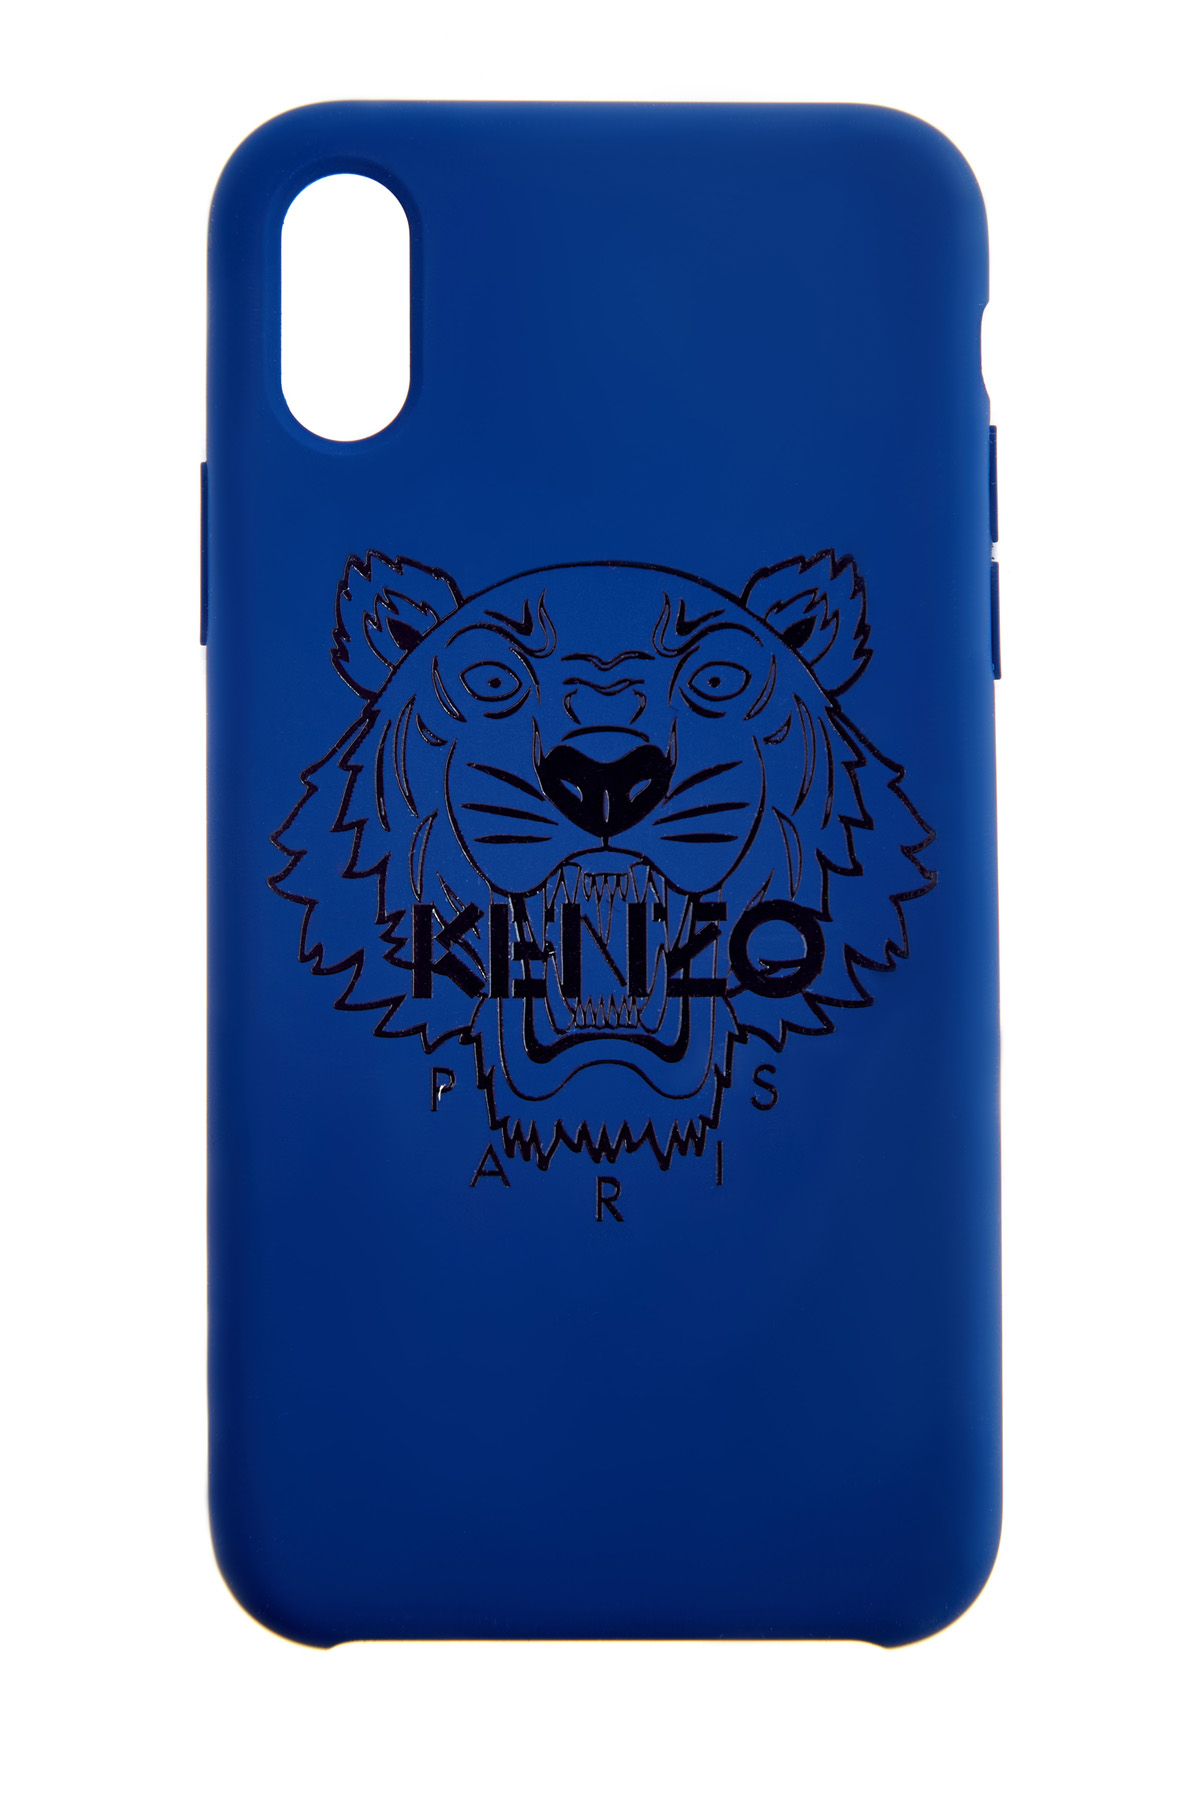 Чехол на iPhone X/XS с покрытием soft-touch и логотипом «Tiger» KENZO, цвет синий, размер 5.5